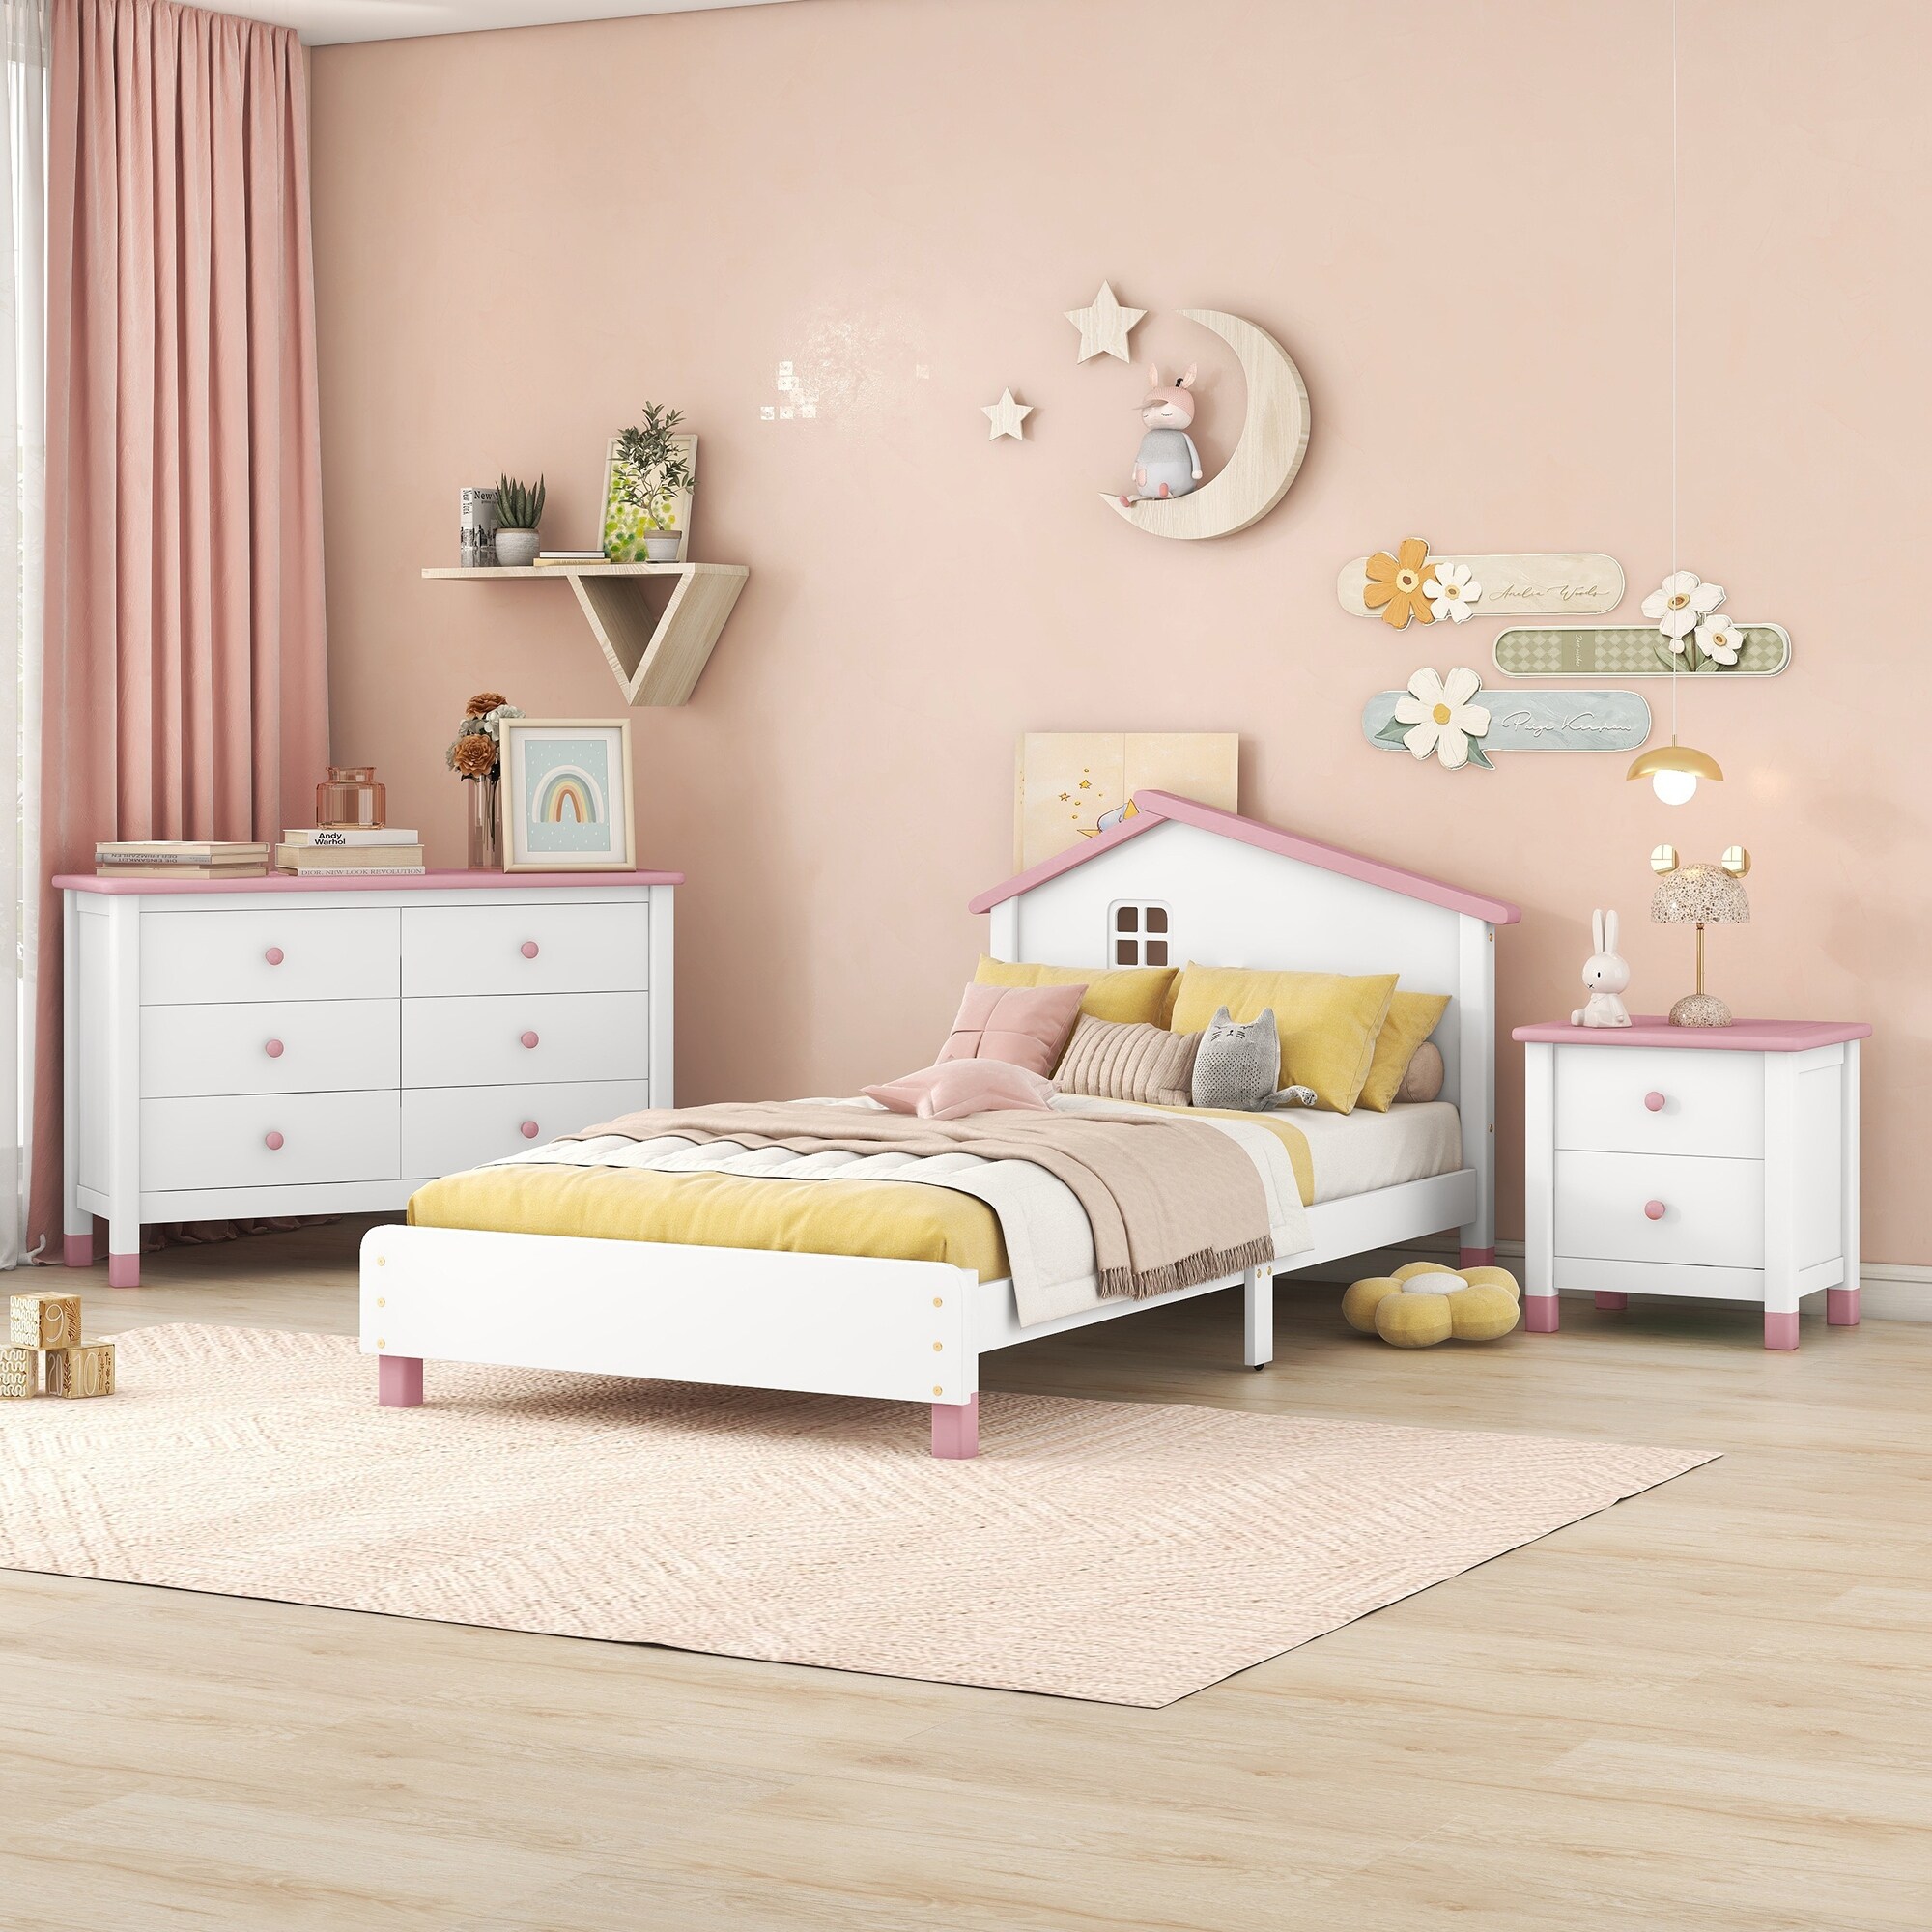 3-pieces Bedroom Sets  Platform Bed W/ Nightstand And Storage Dresser  White+pink